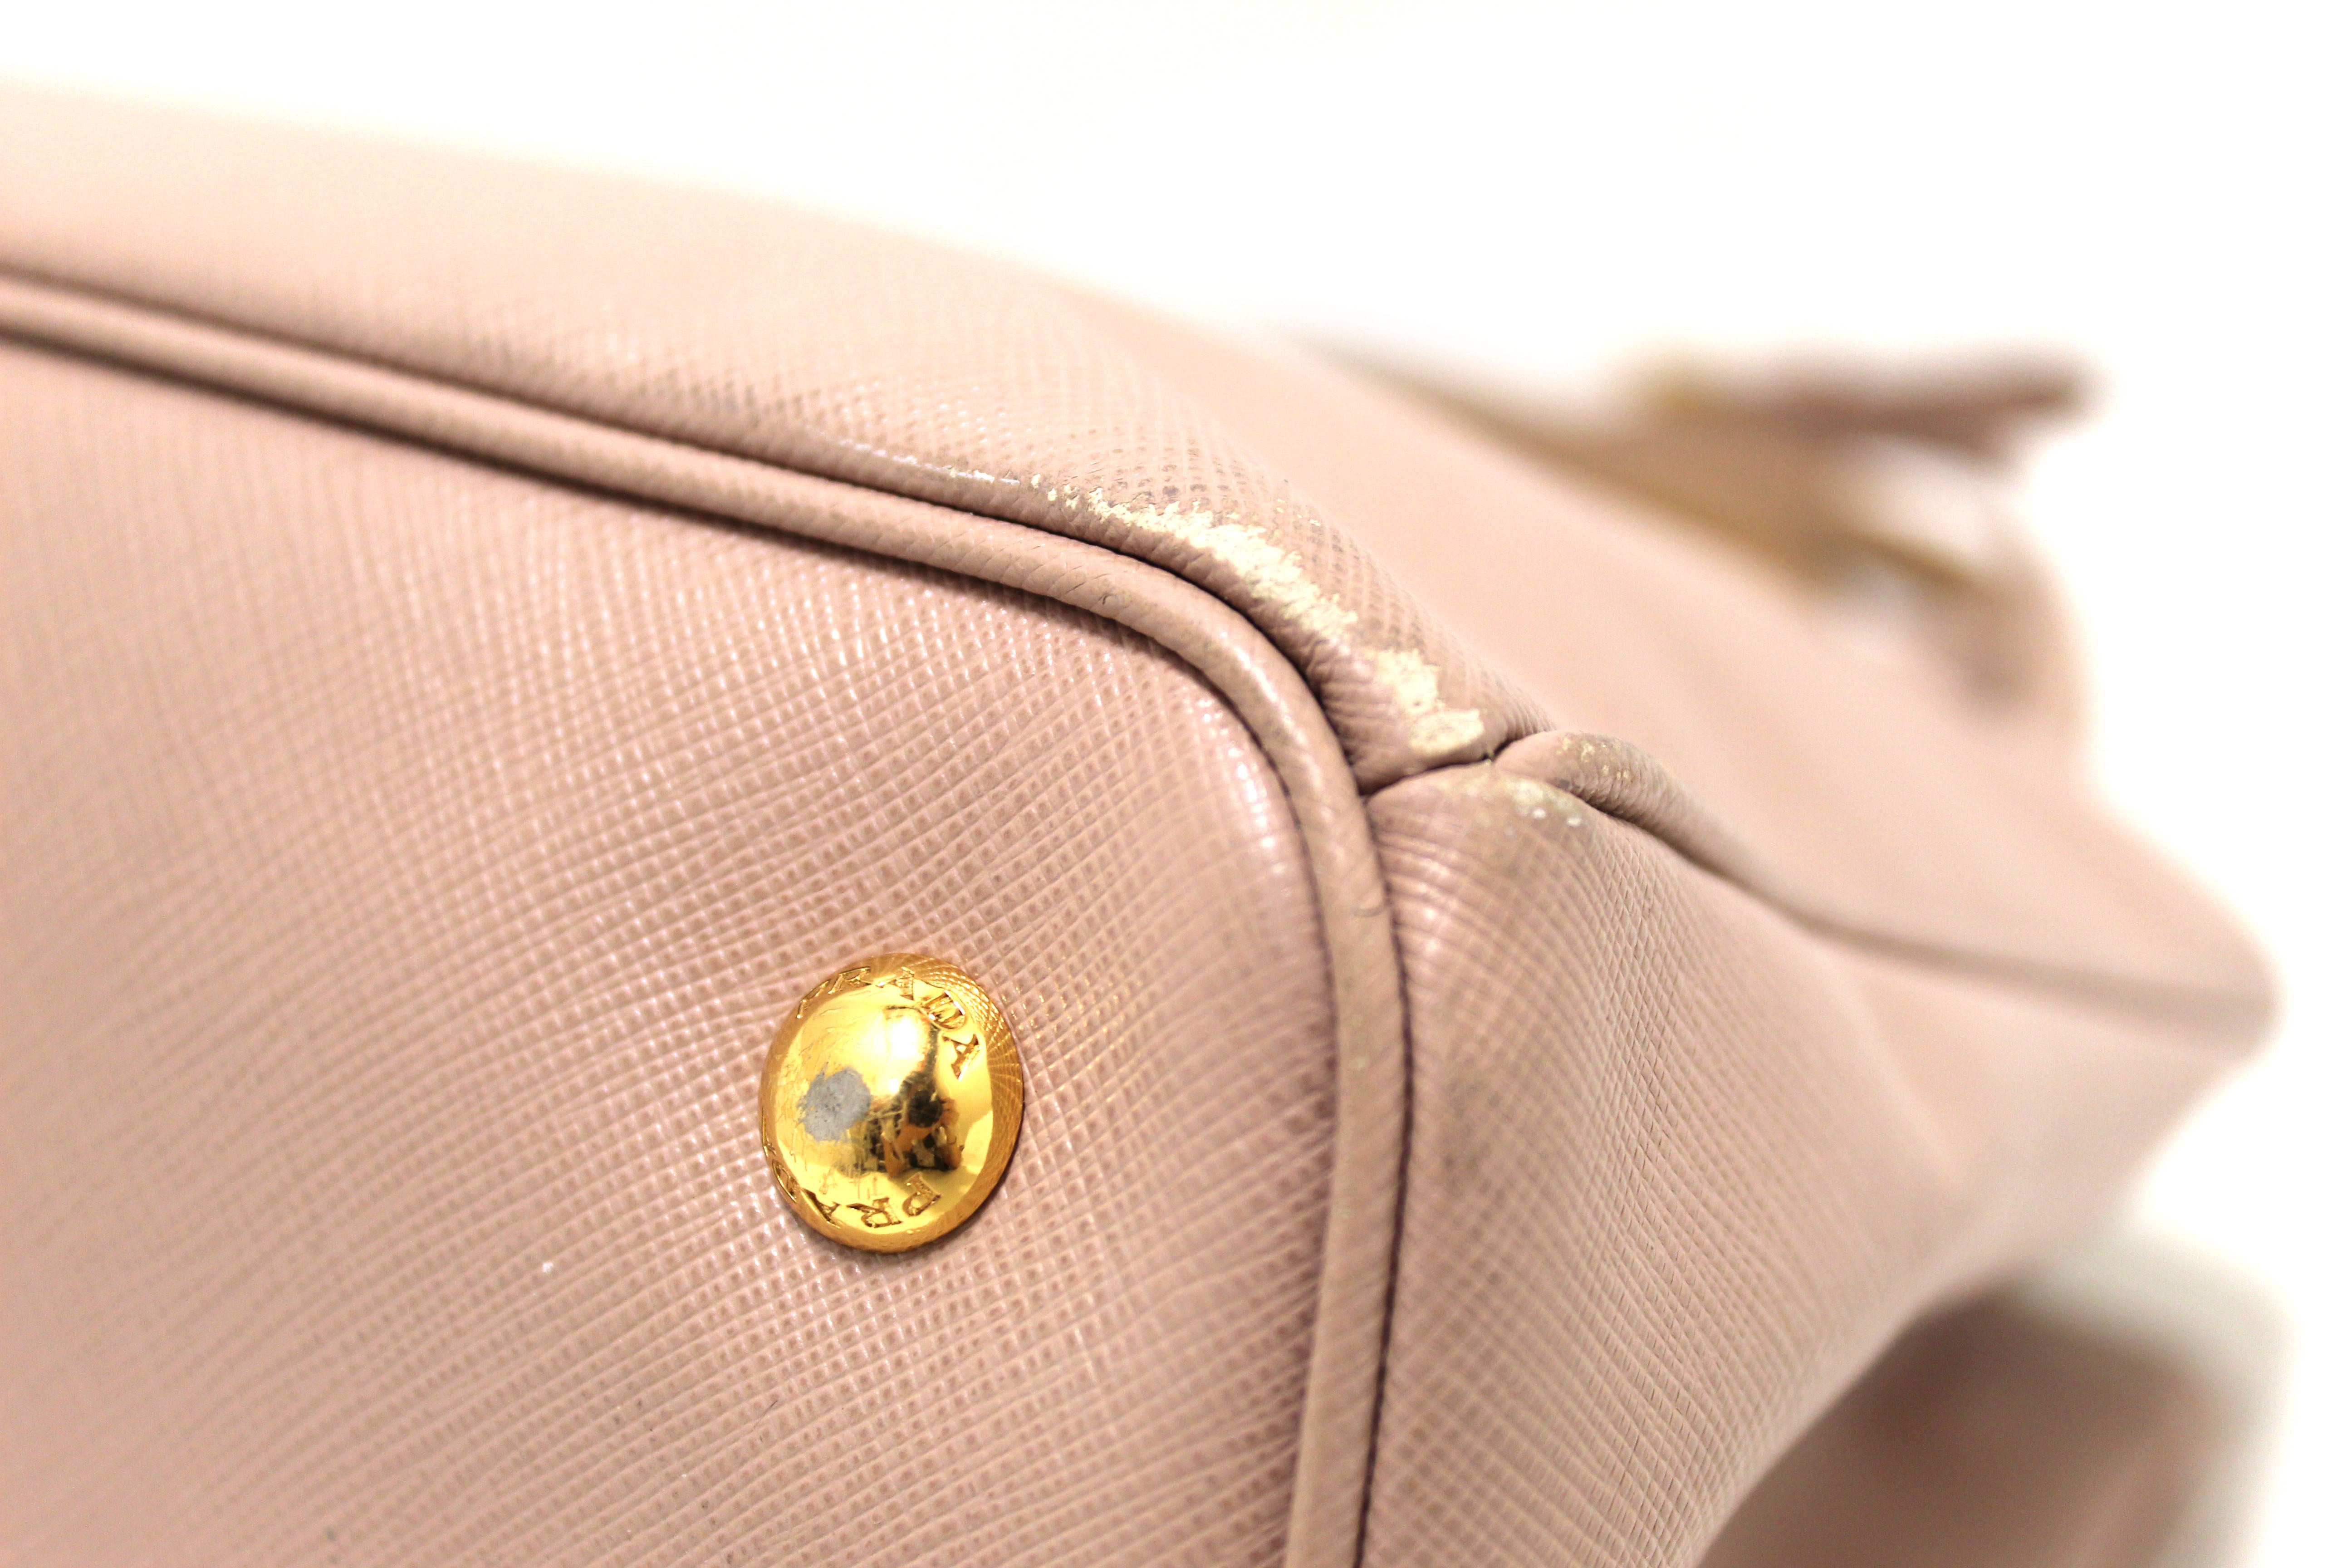 Prada Pink Saffiano Lux Leather Small Double Zip Galleria Tote at